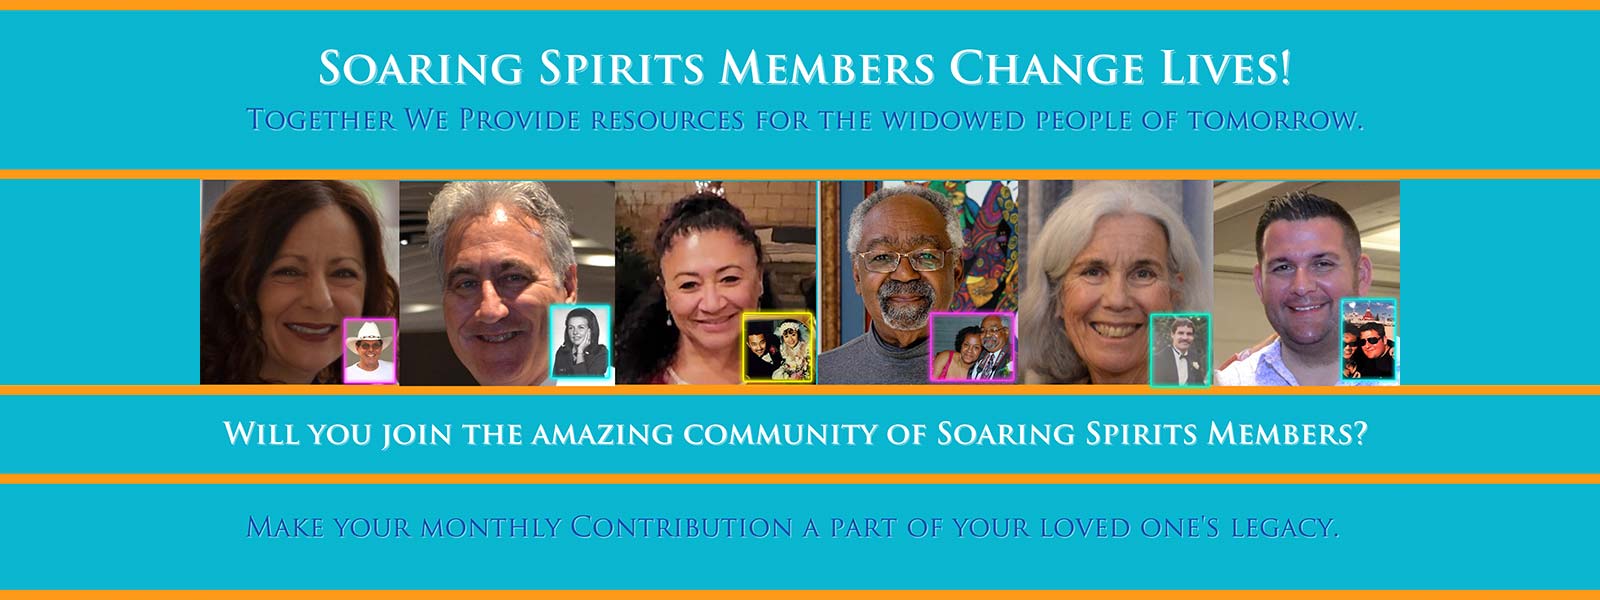 Soaring Spirits International Members Change Lives